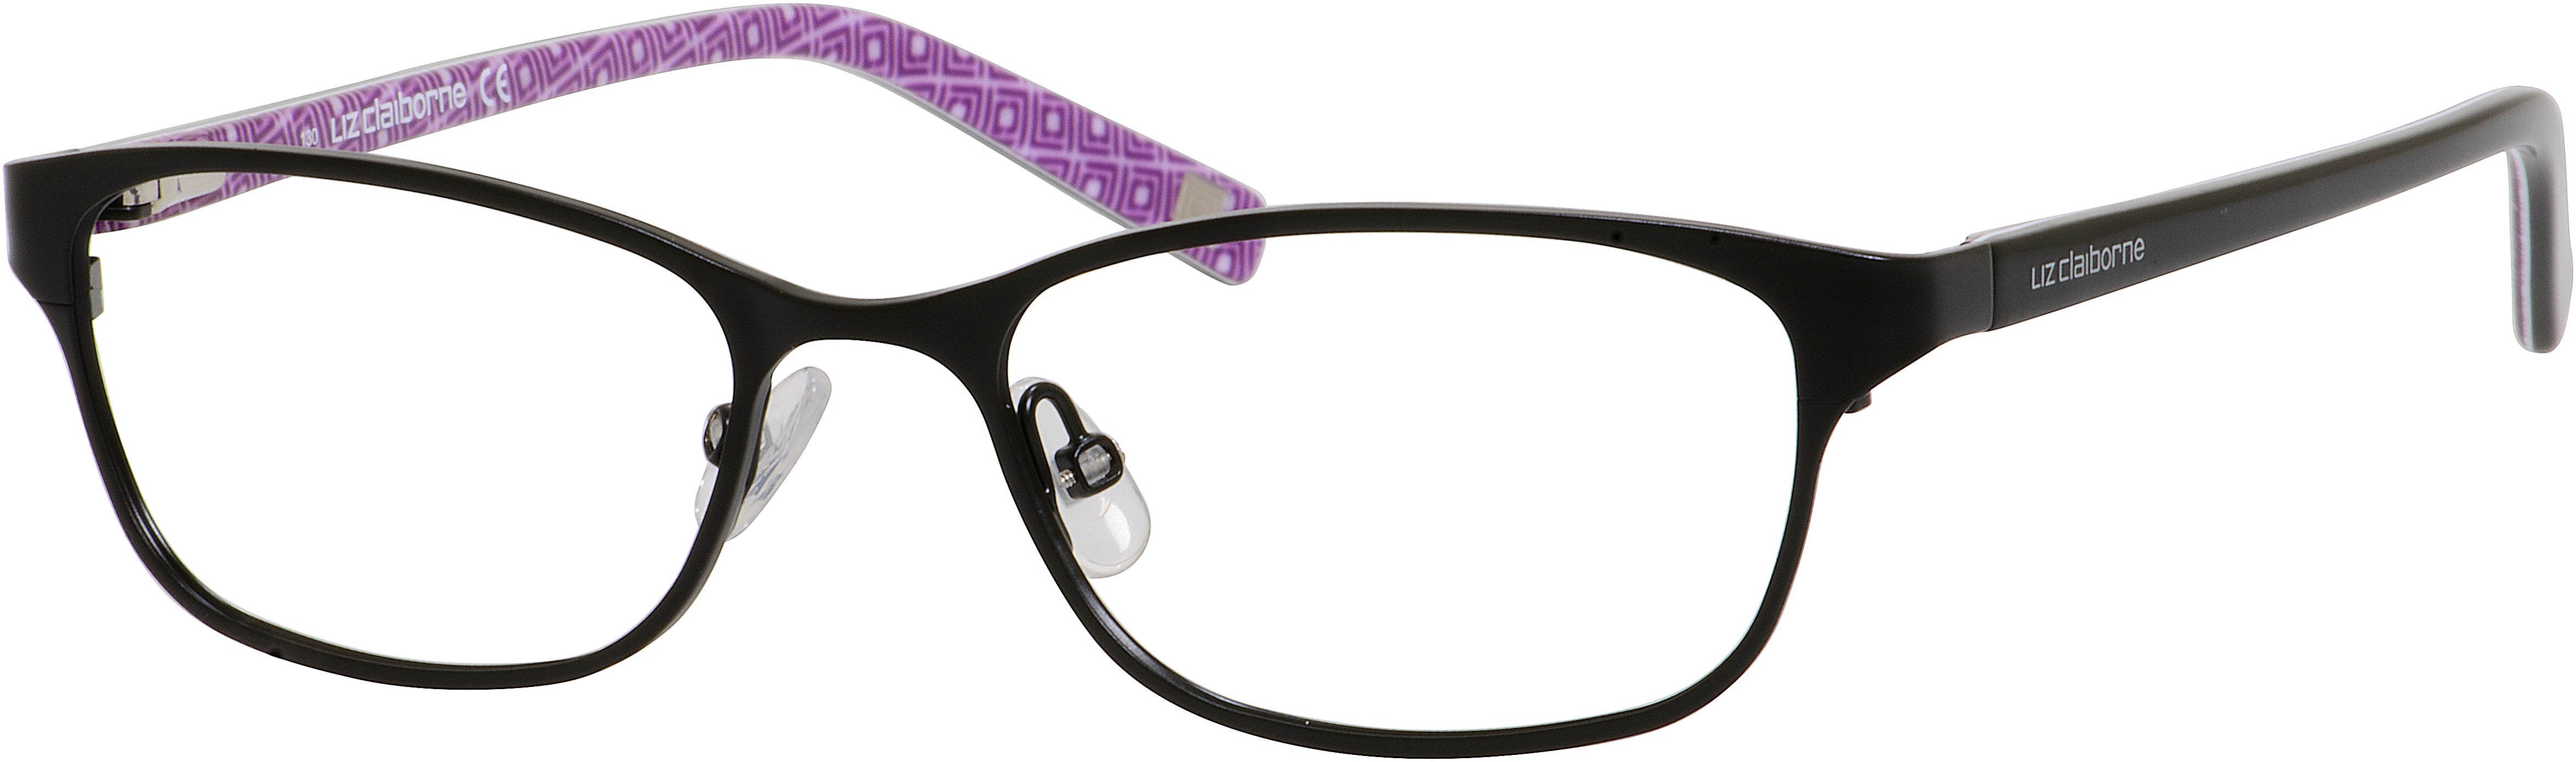  Liz Claiborne 425 Rectangular Eyeglasses 0003-0003  Black (00 Demo Lens)